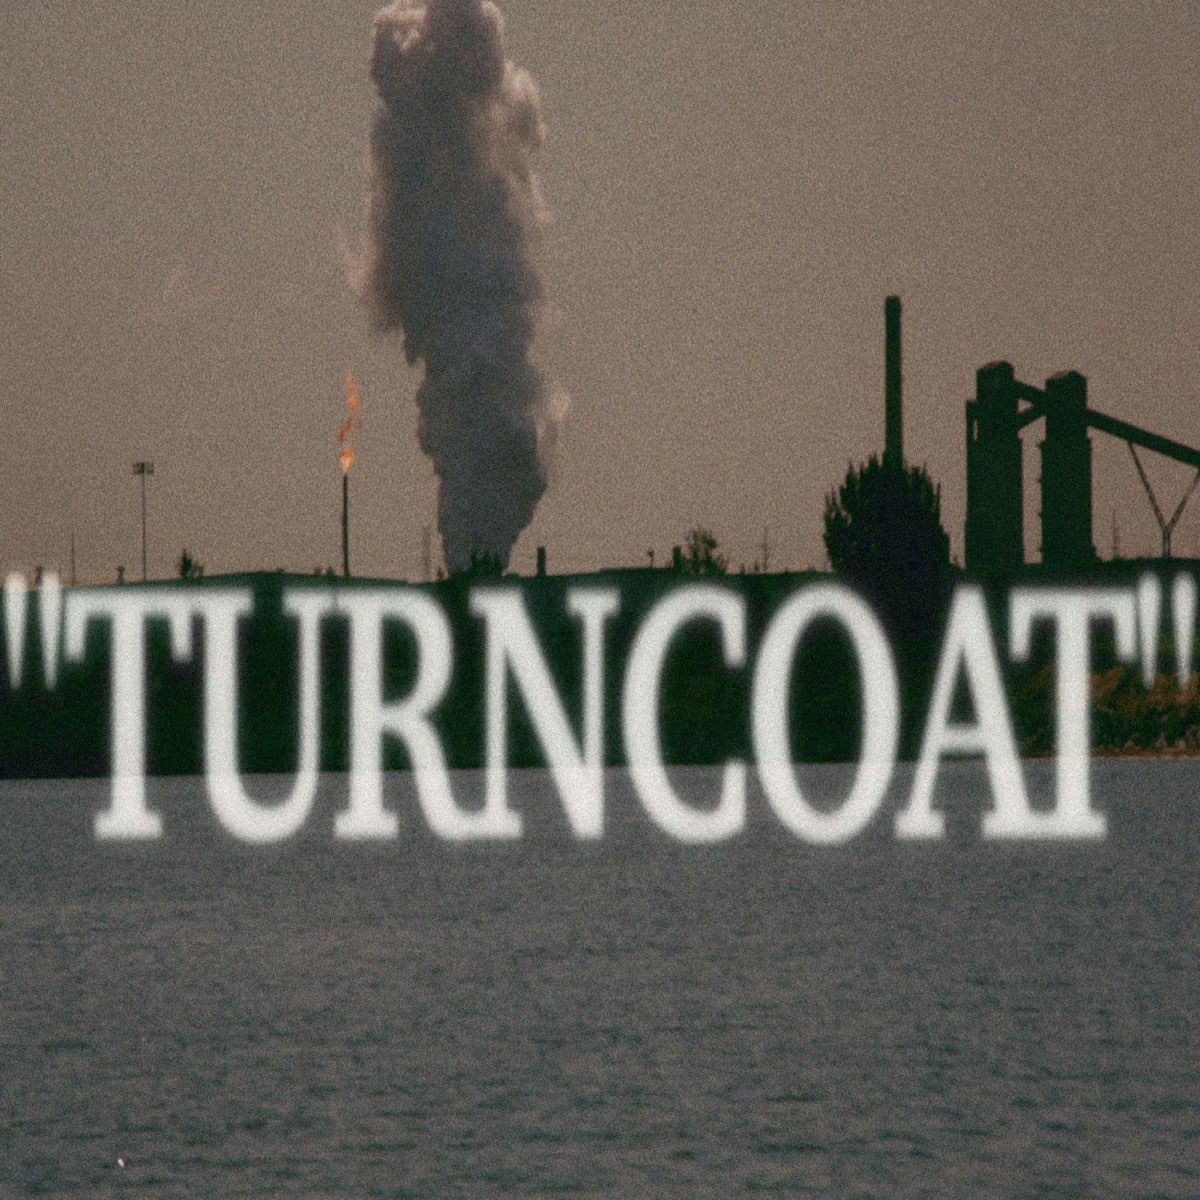 Turncoat